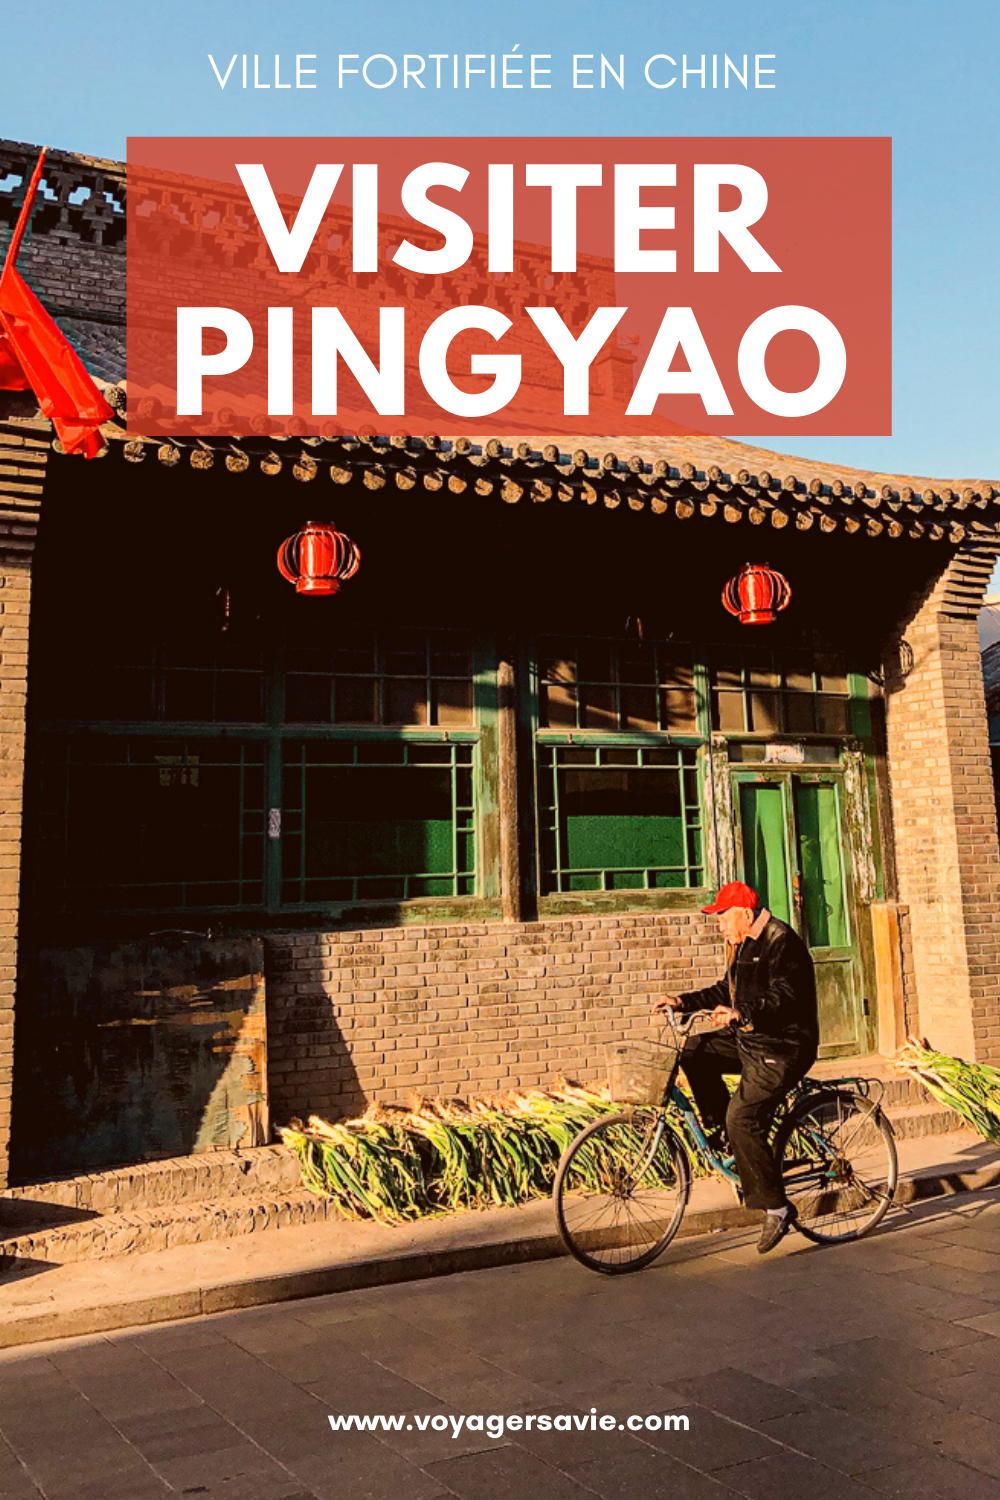 Visiter Pingyao en Chine : Ville fortifiée à visiter en Chine